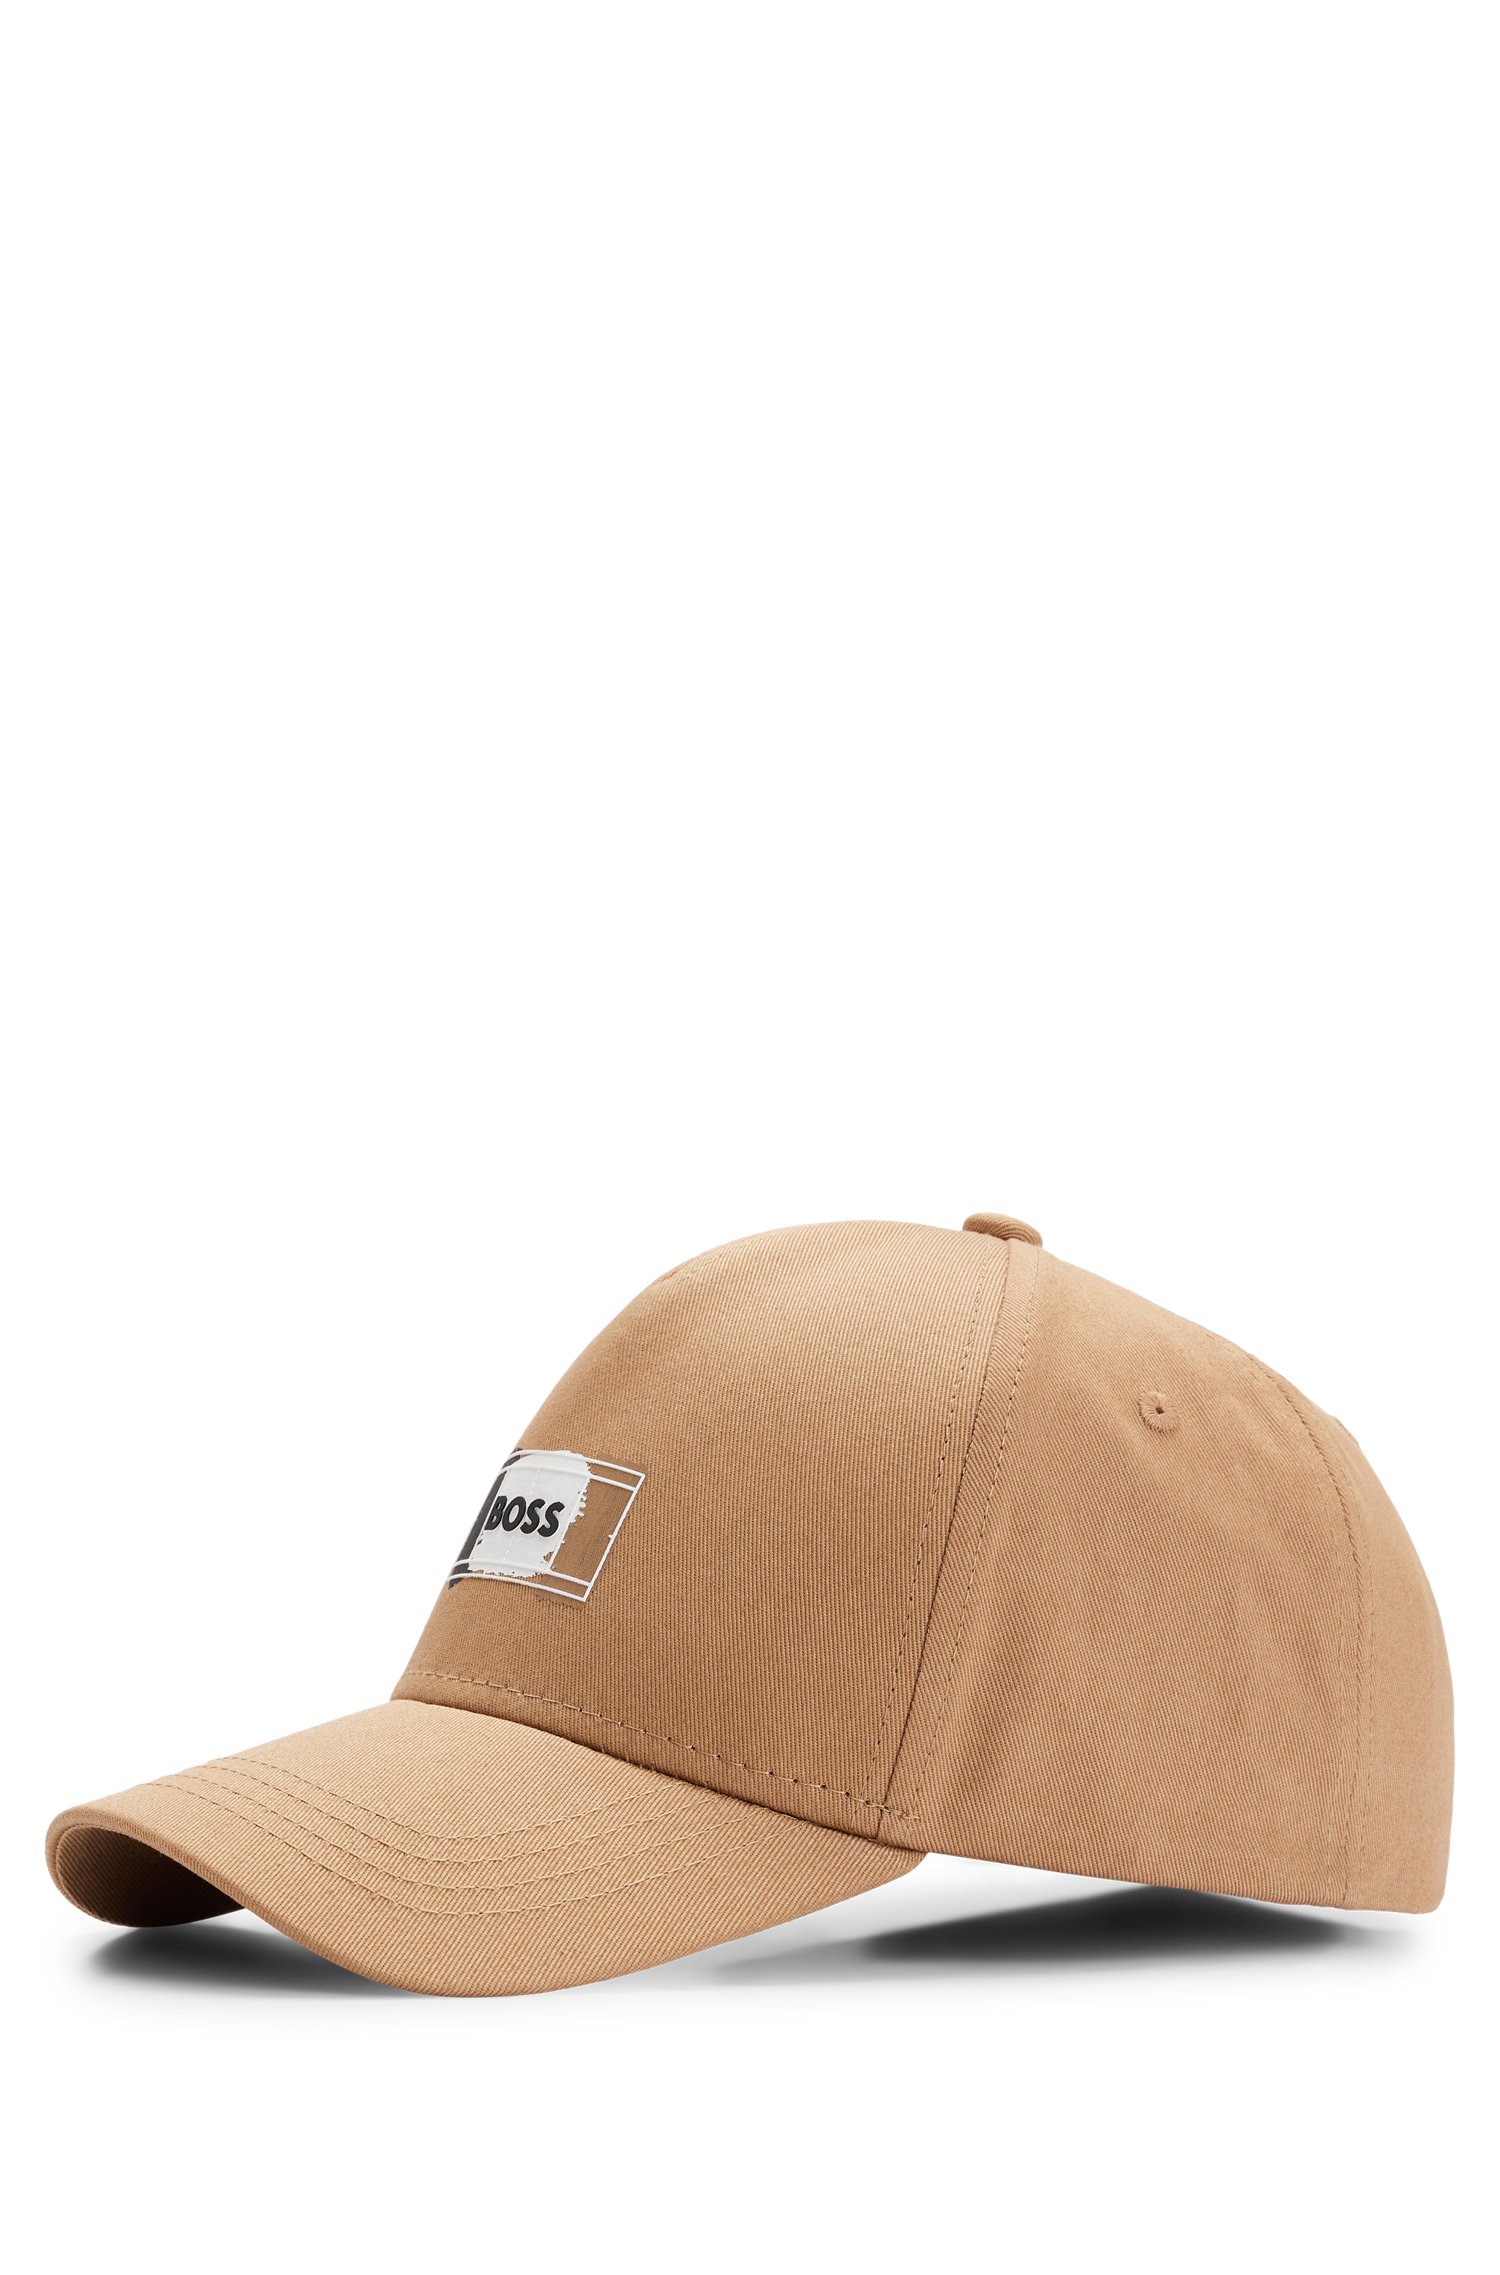 Cotton-twill cap with signature logo print